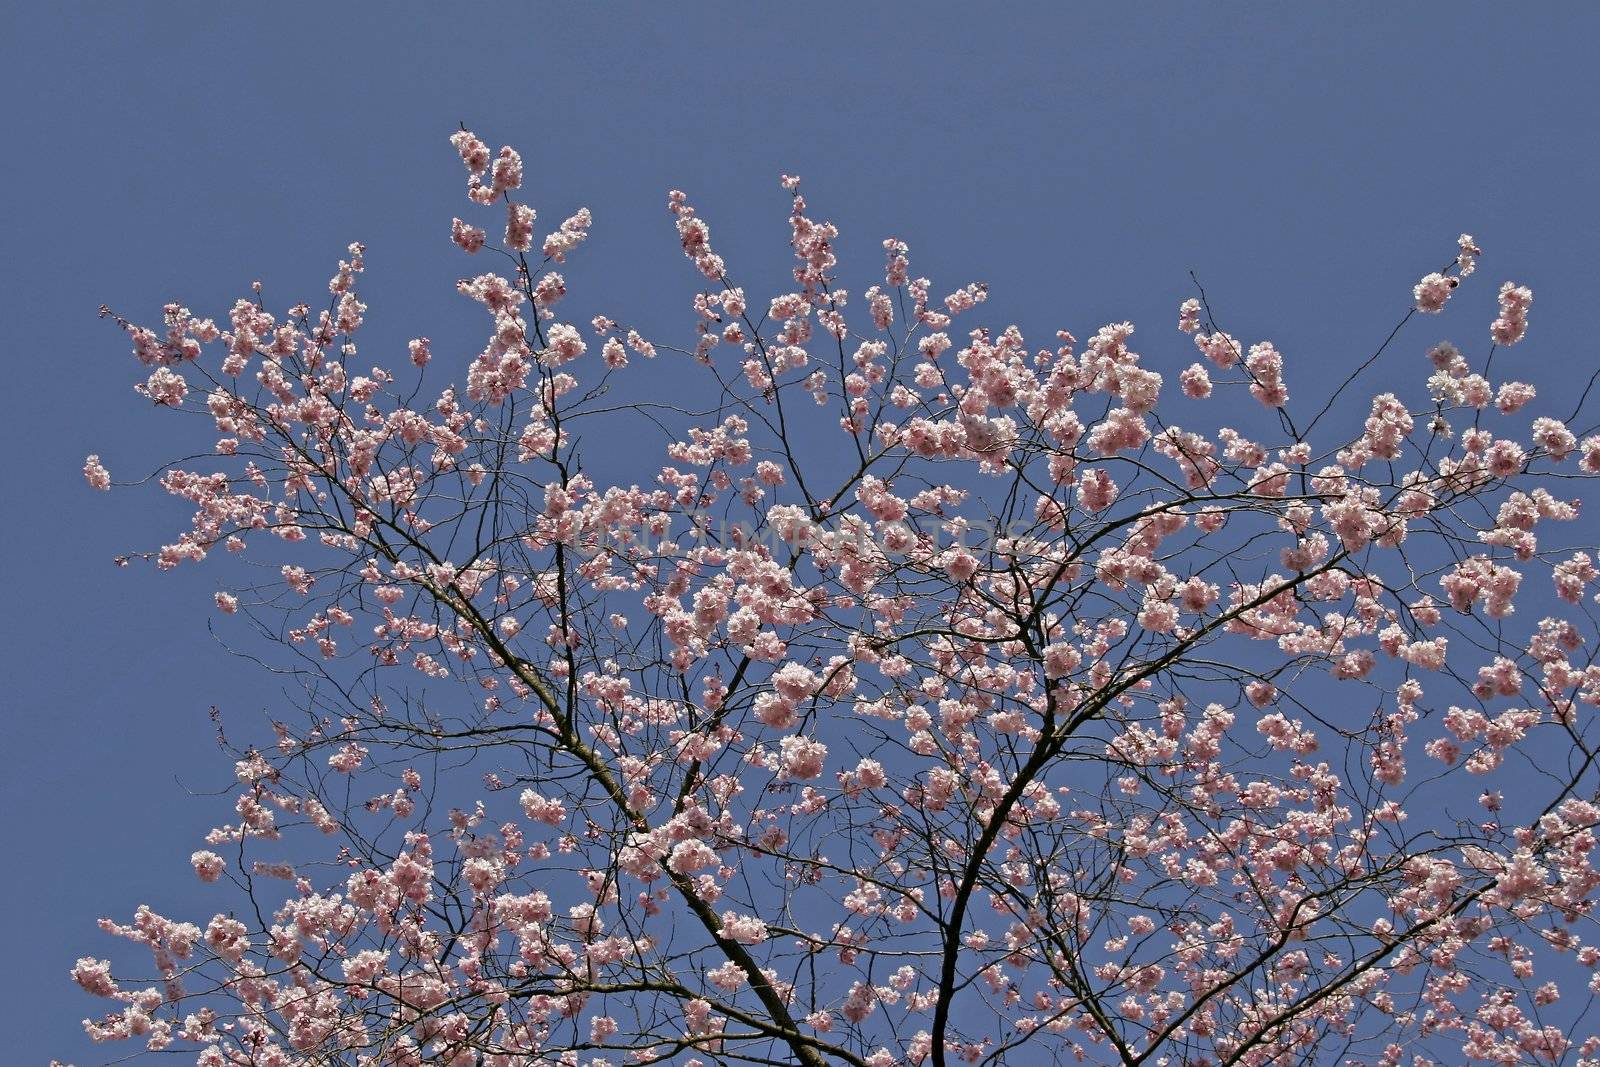 Prunus, Japanese Cherry tree in spring.
Prunus, Japanische Zierkirsche, Frühling.